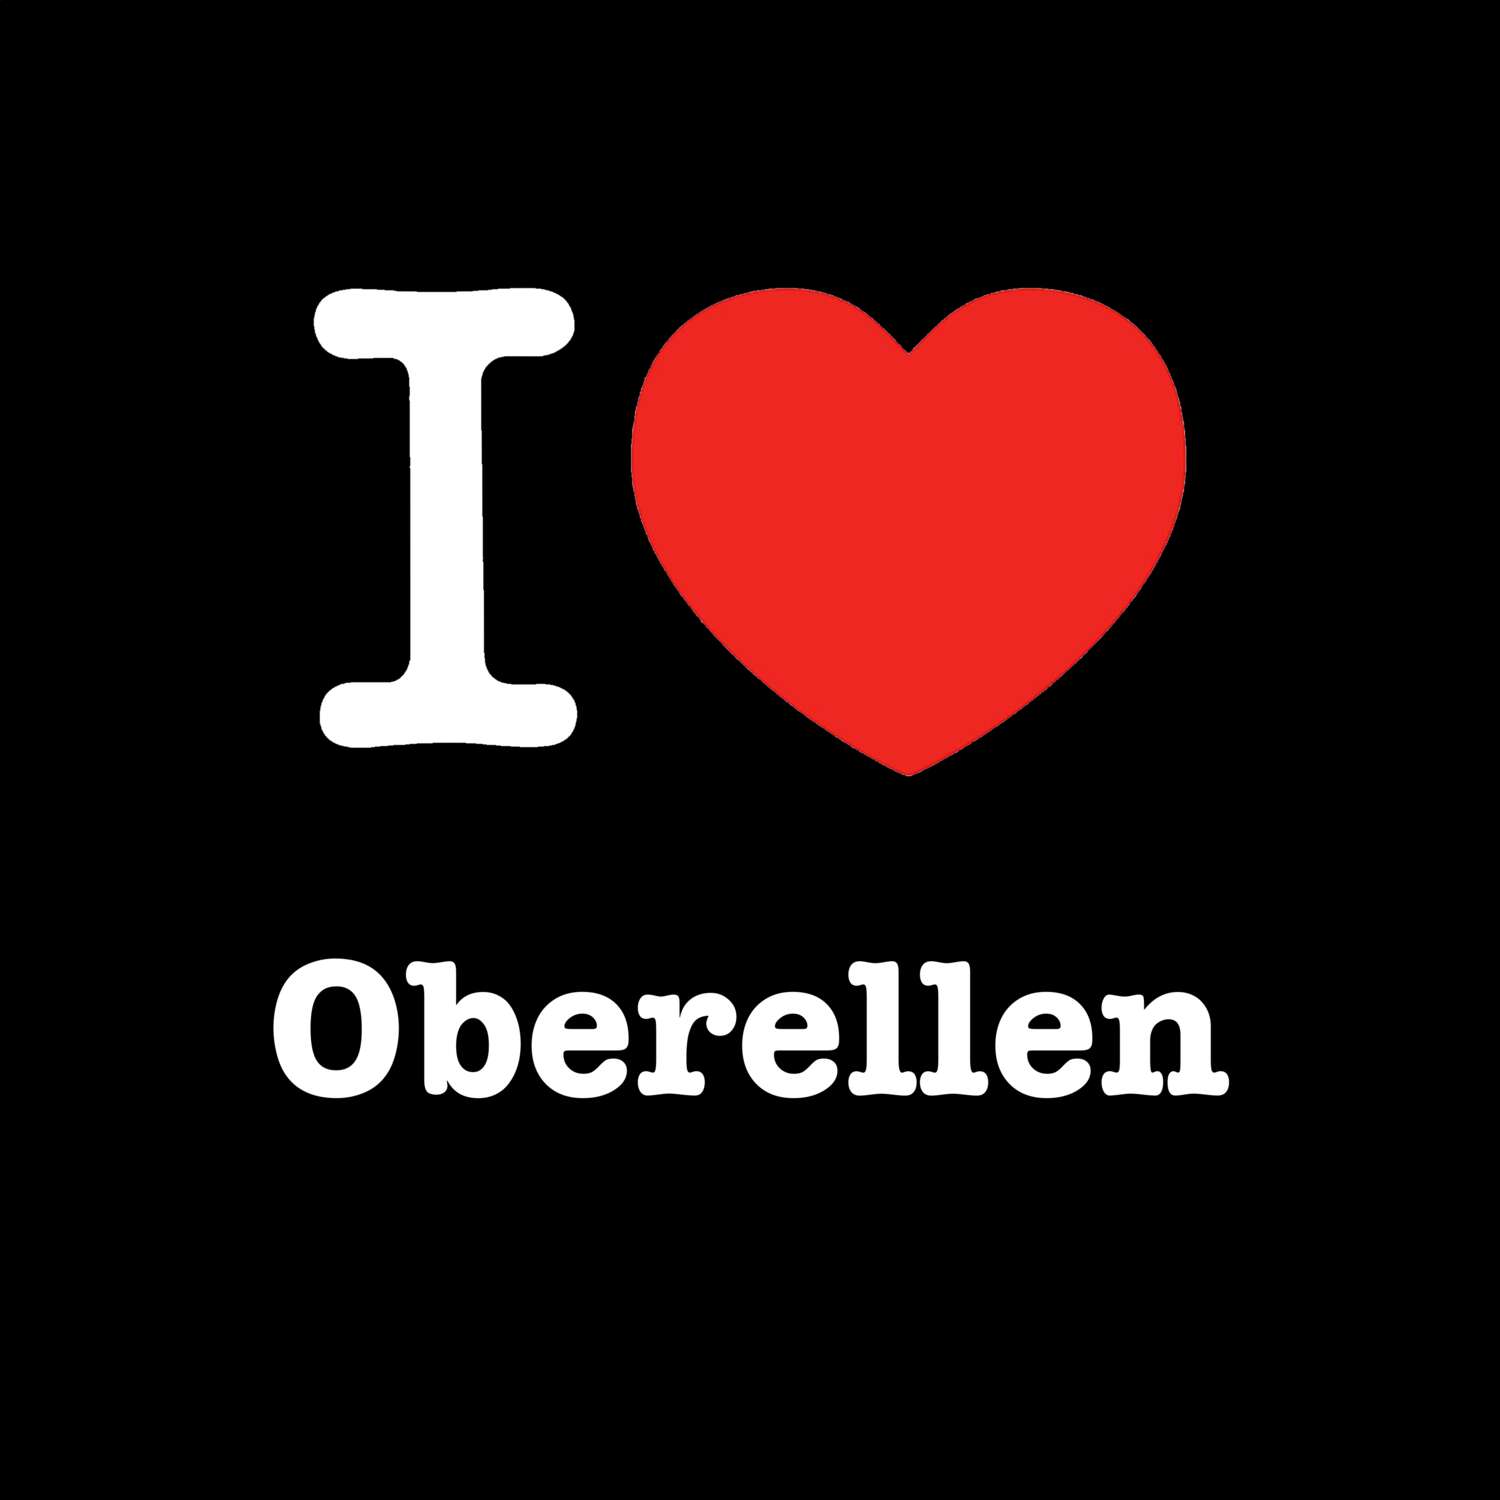 Oberellen T-Shirt »I love«